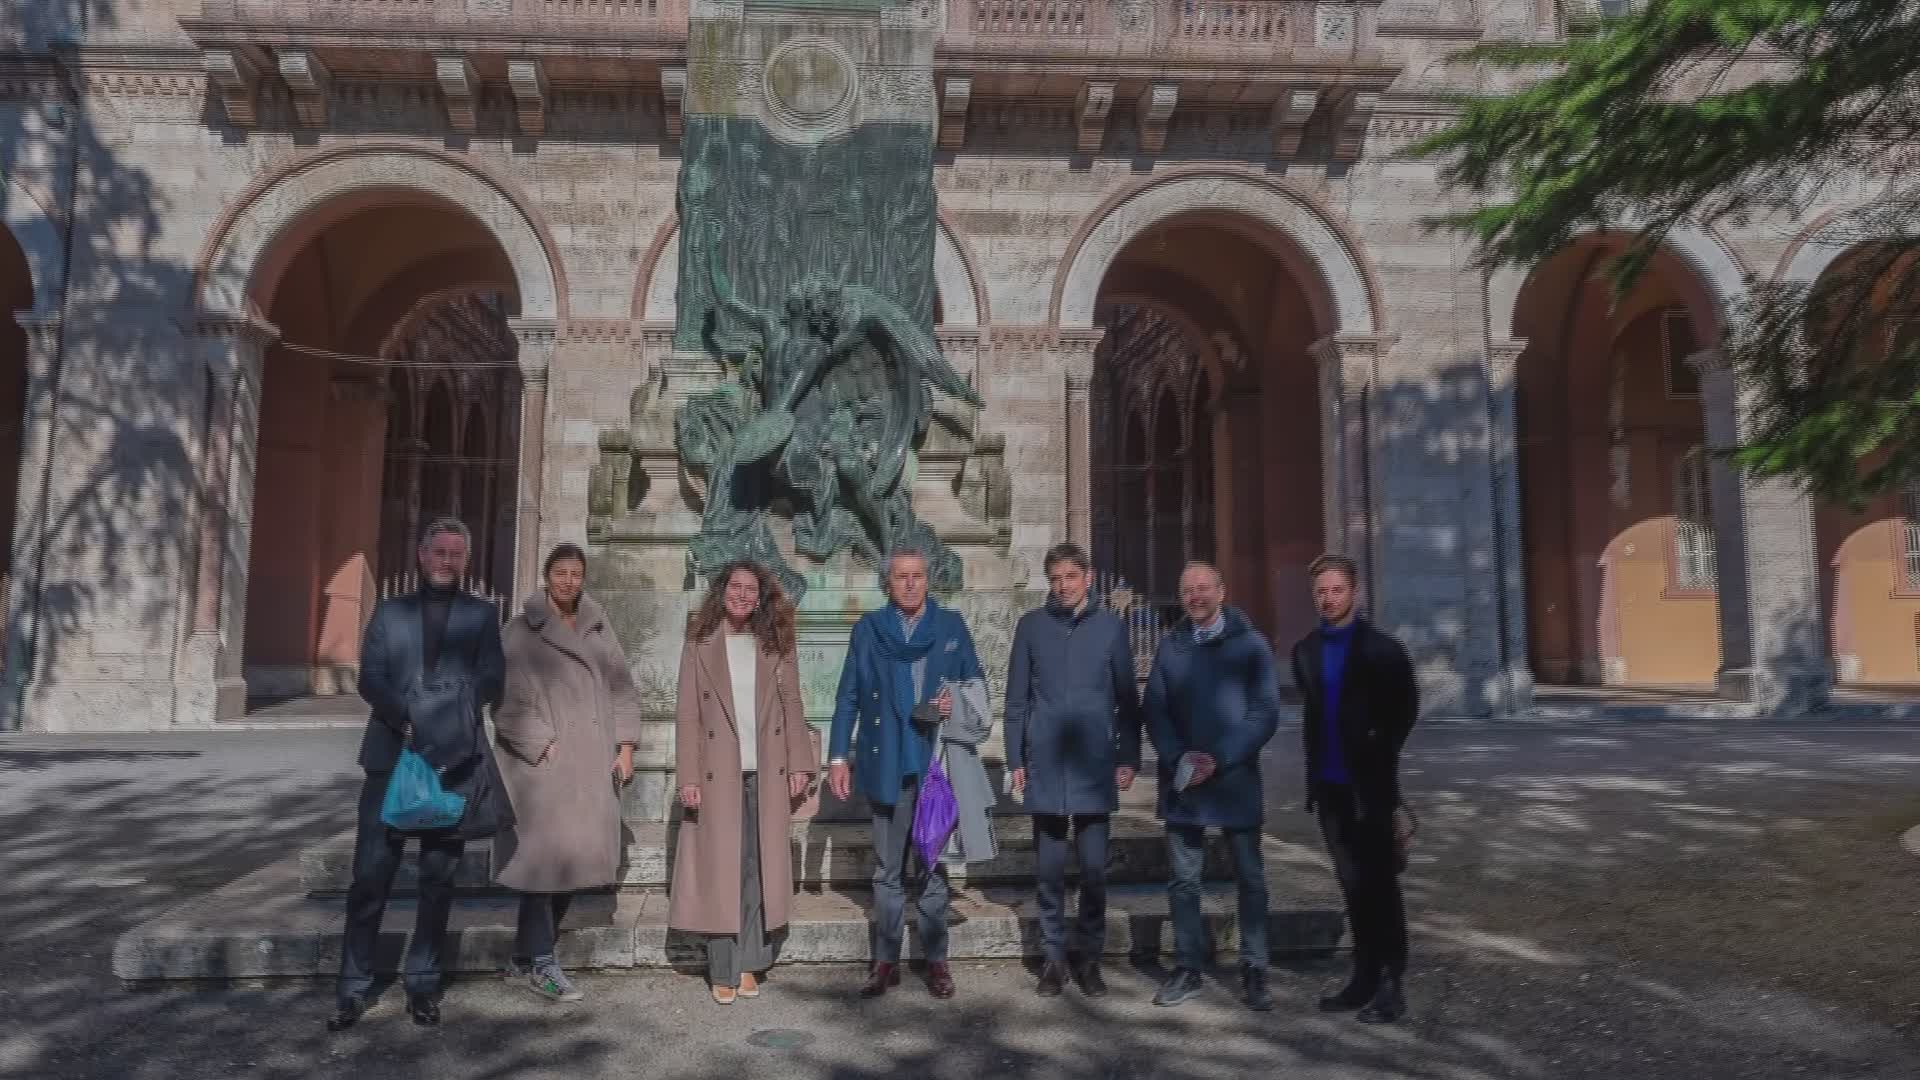 Comune partecipa a concorso art bonus con monumento al Perugino